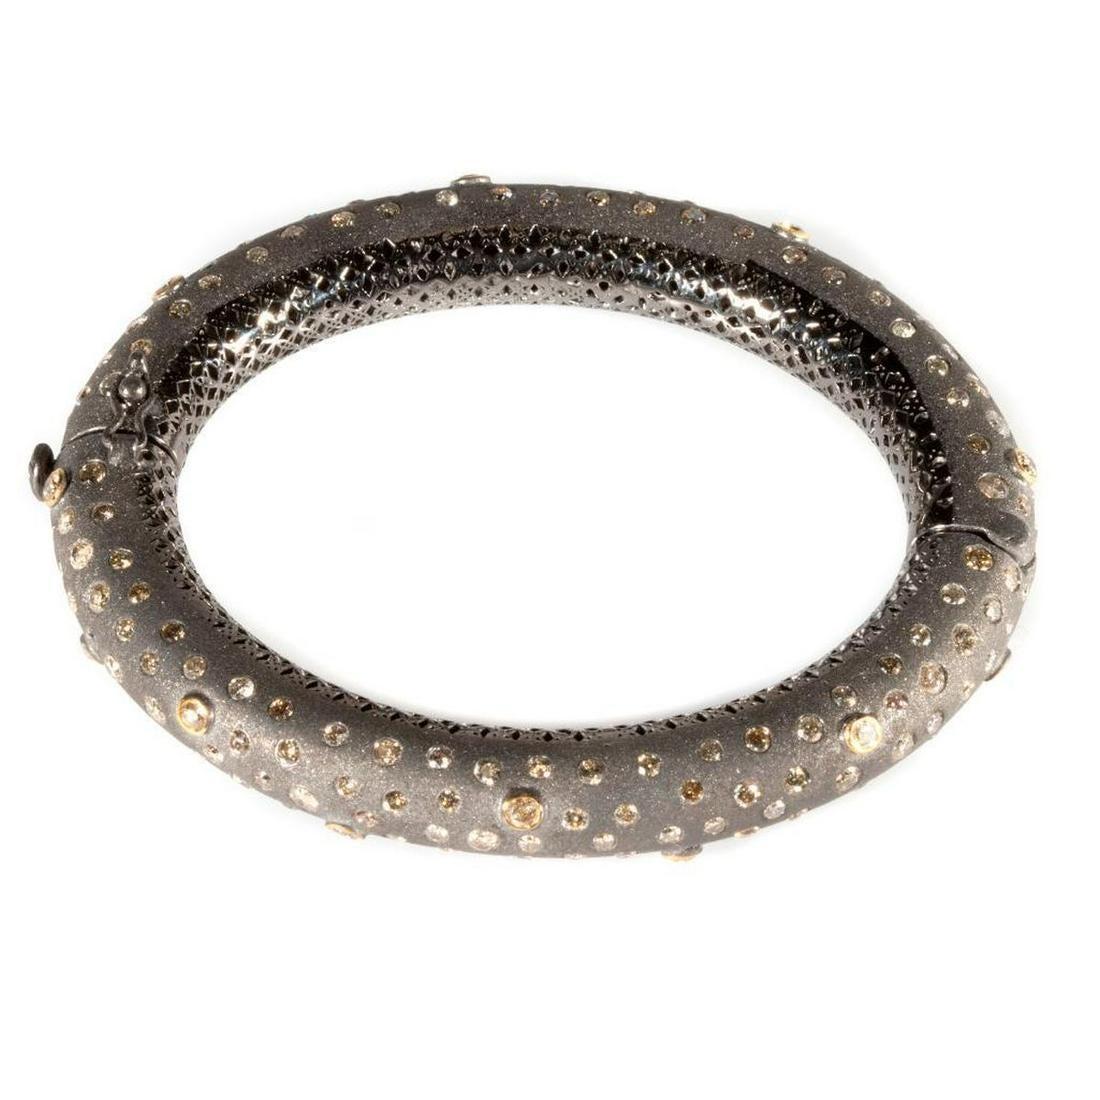 Diamond, blackened silver & 14k gold bangle bracelet